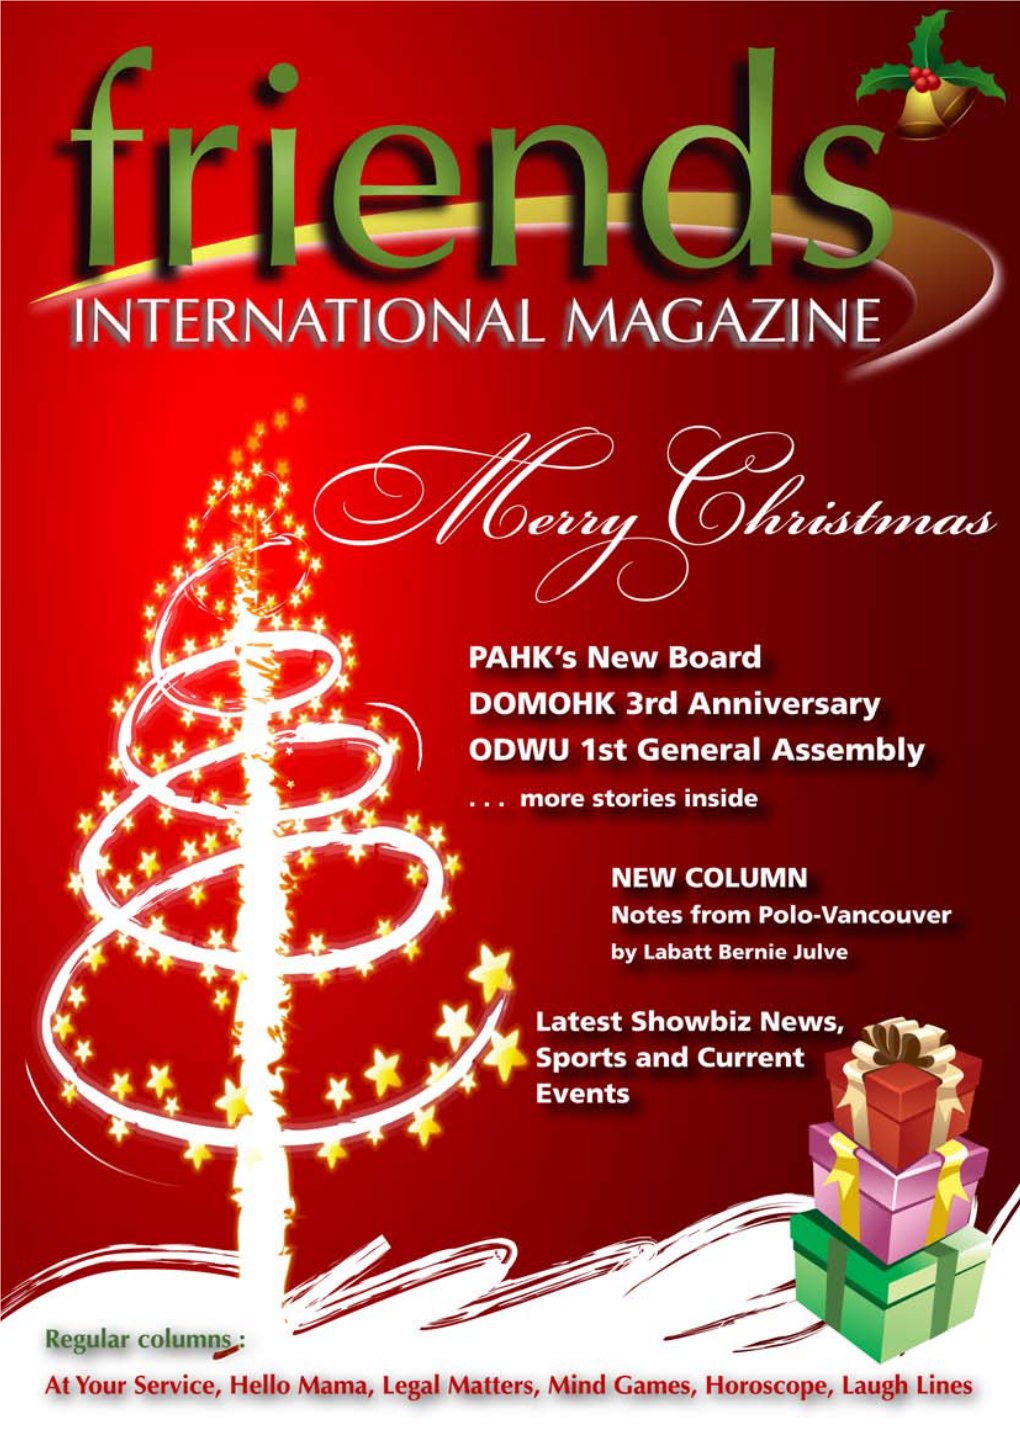 Friends International Magazine December 2008 1 Friends International Magazine December 2008 Editor’S Note Greetings to All Readers !